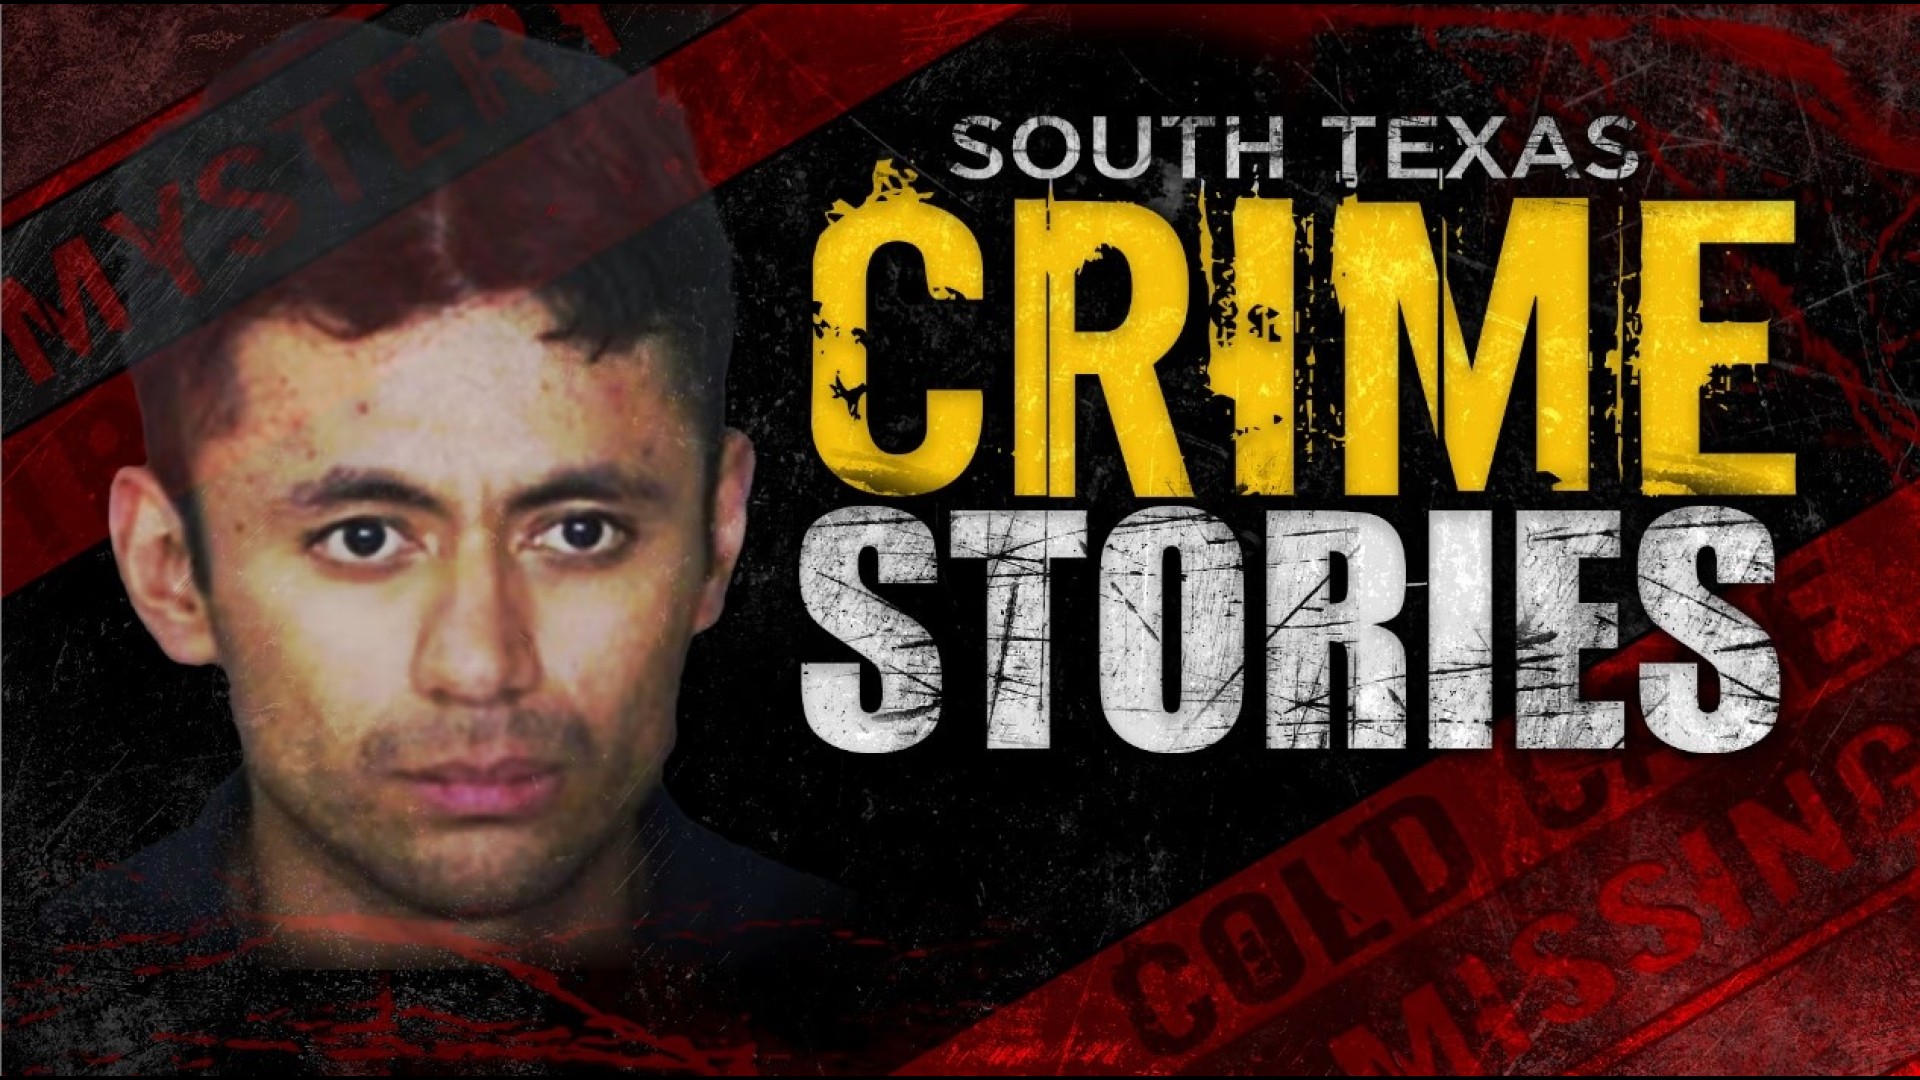 The San Antonio Strangler South Texas Crime Stories pic